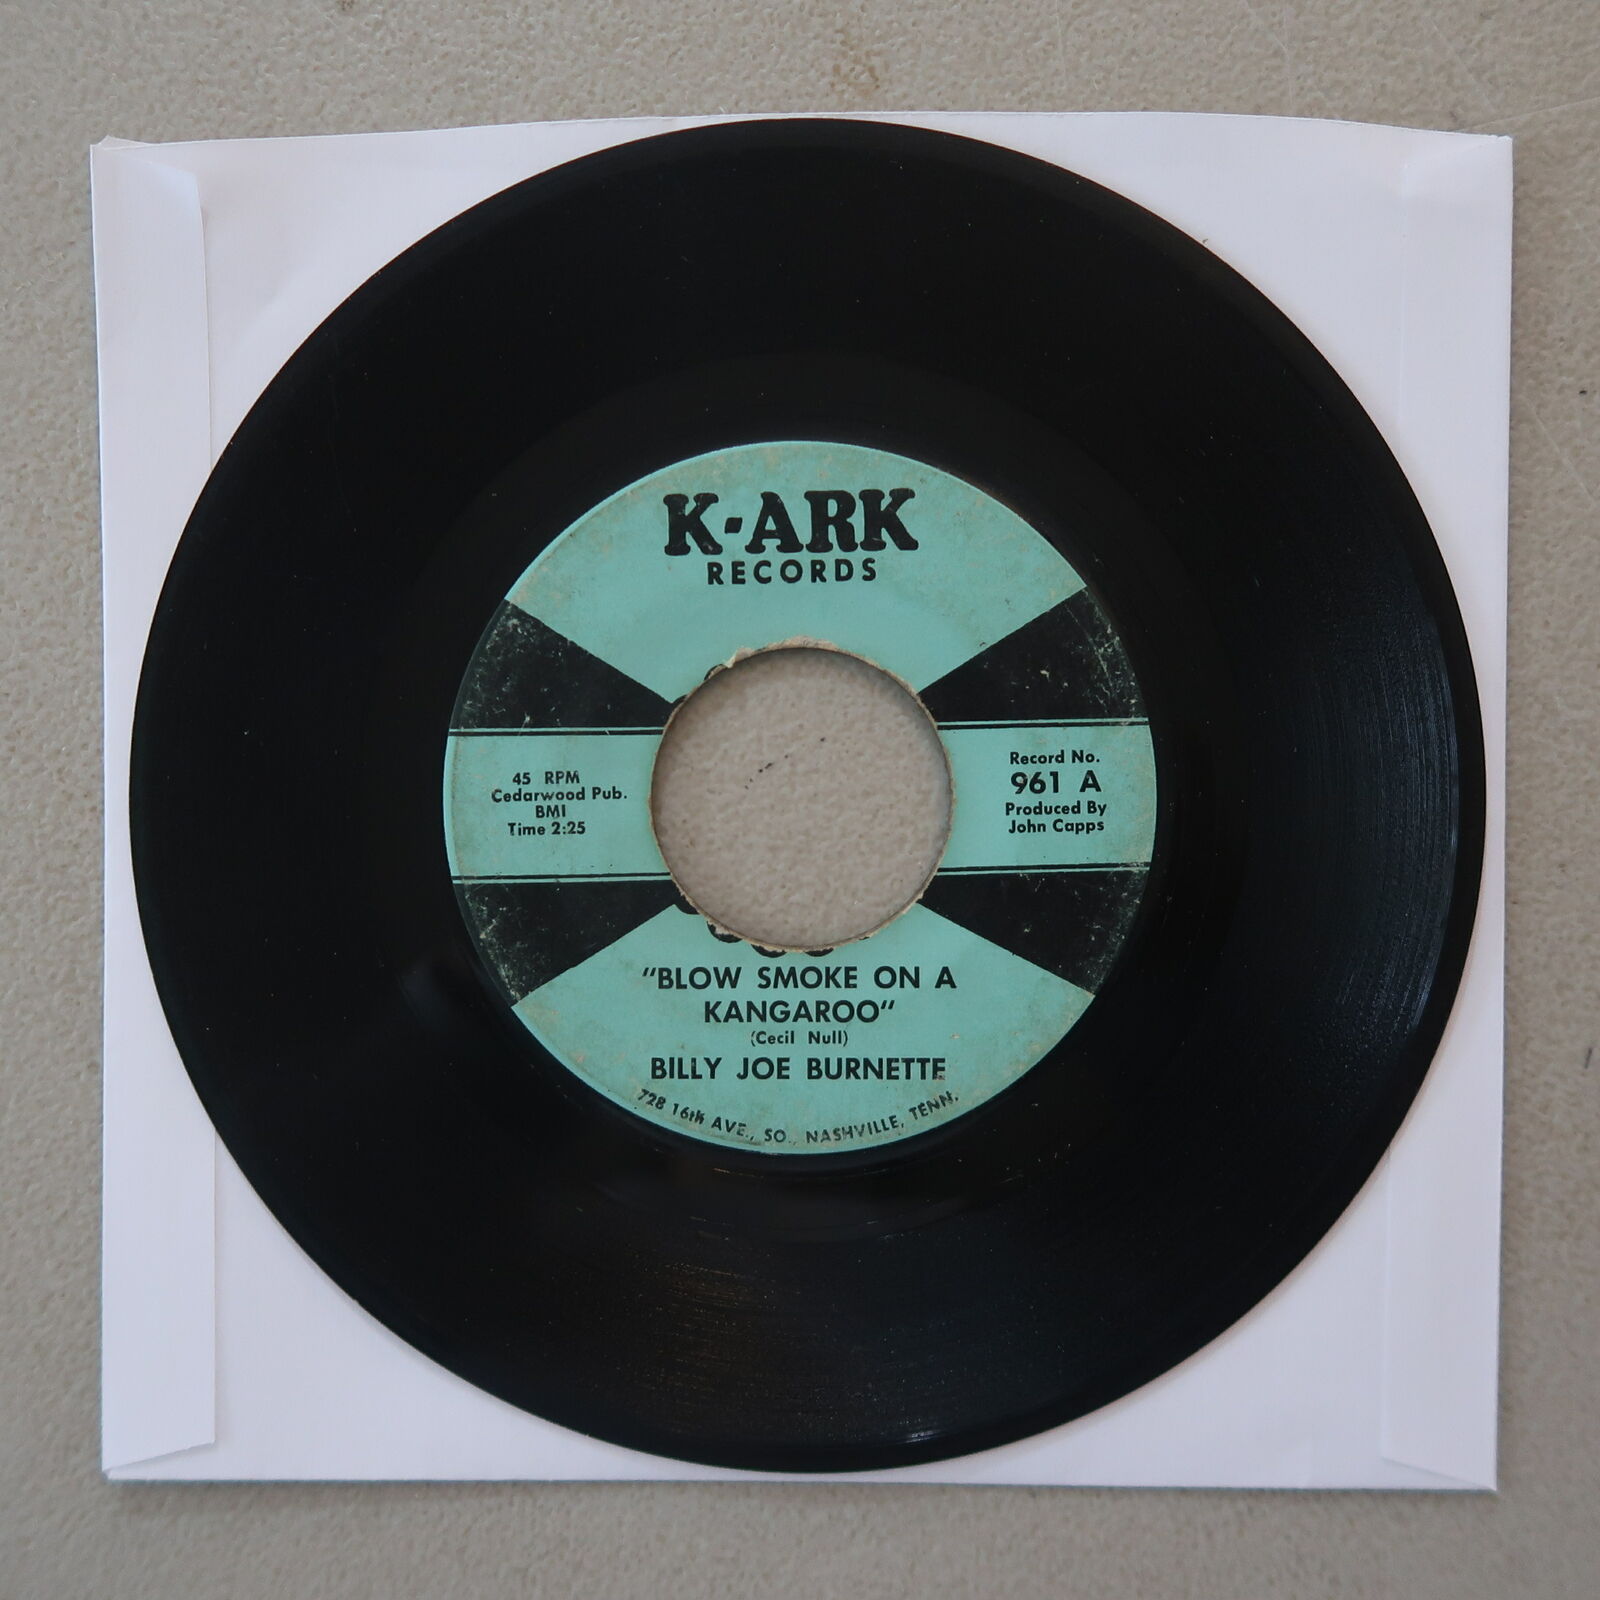 Billy Joe Burnette Blow Smoke On A Kangaroo, Have I Told Vinyl 45 K-ARK VG 8-19